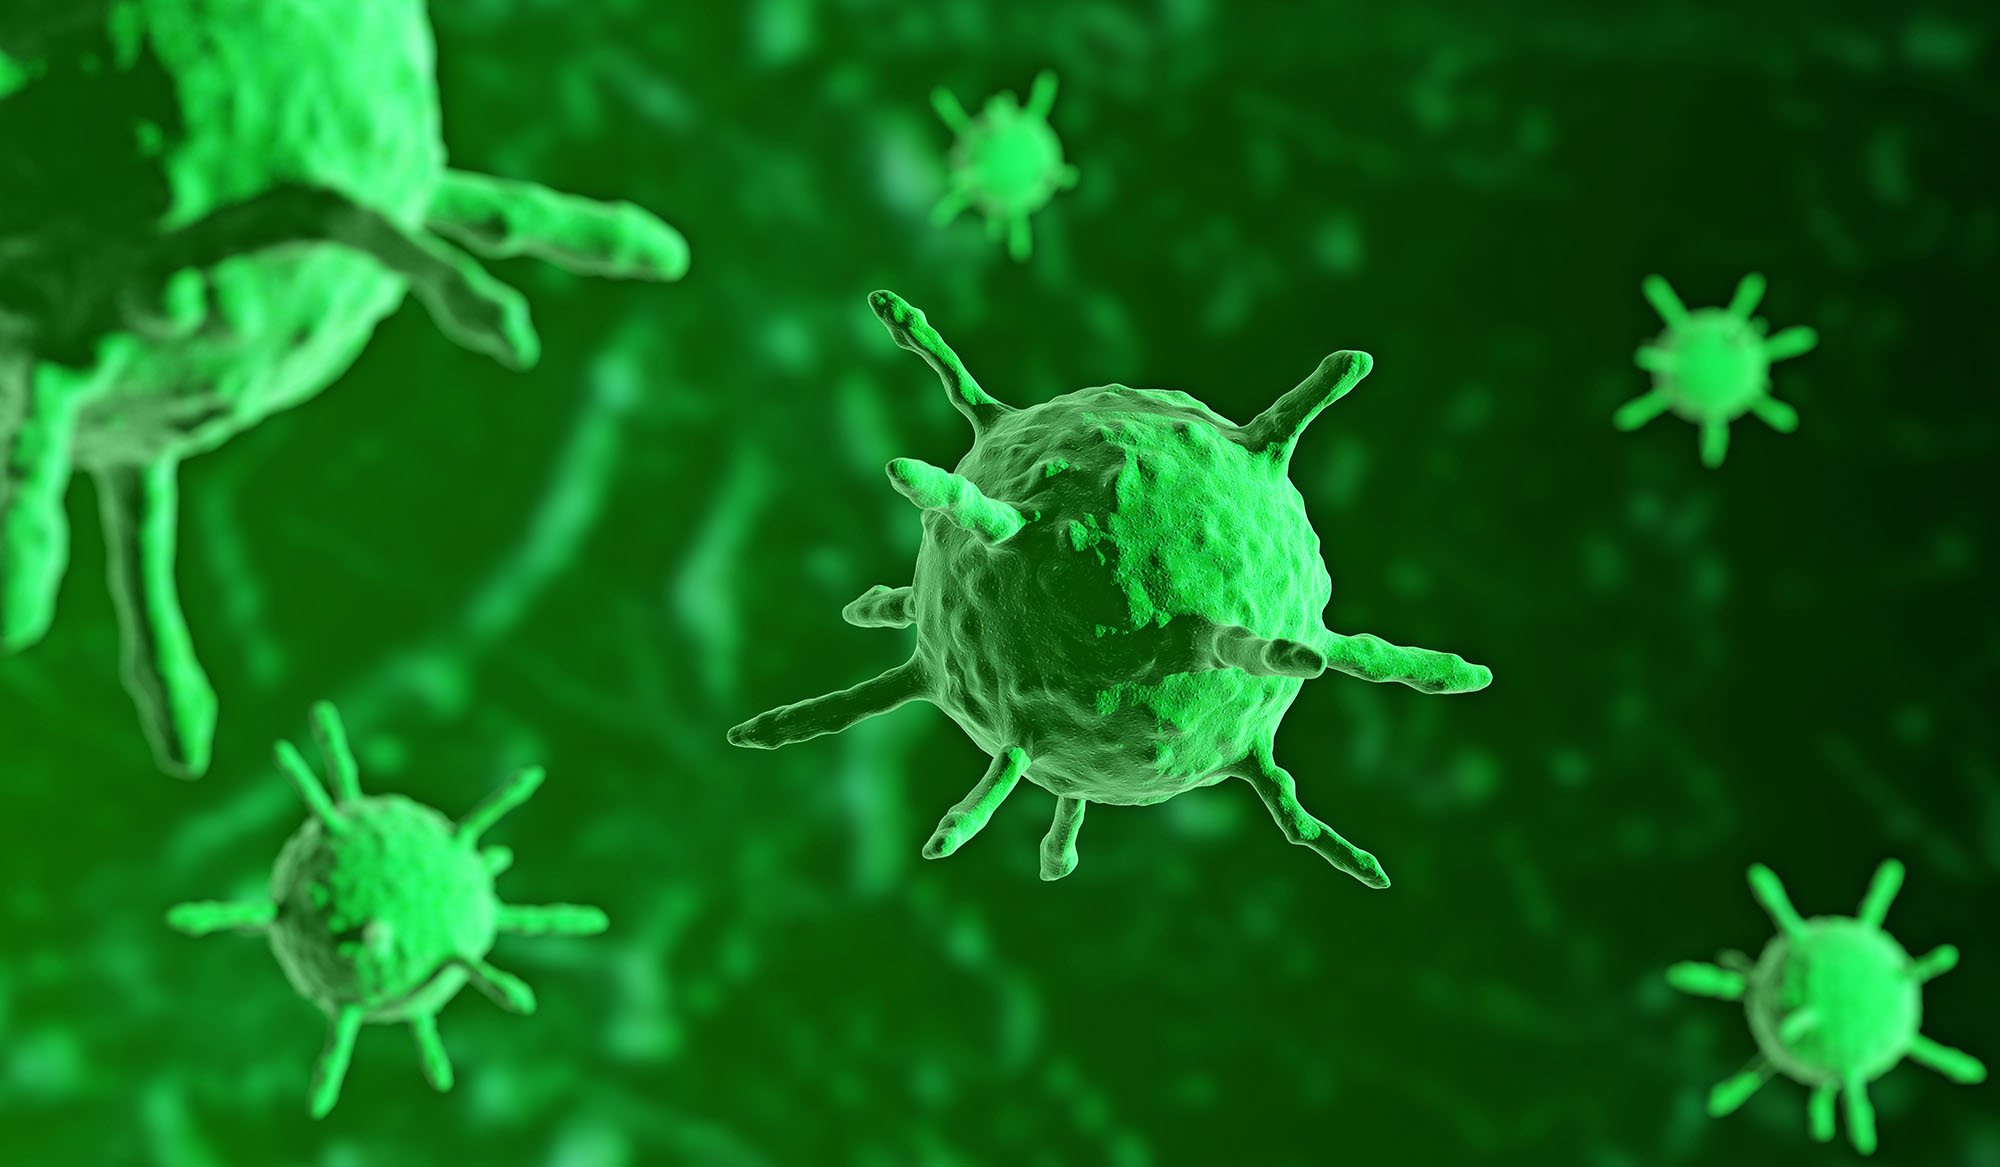 Disinfectants that may kill coronavirus on surfaces